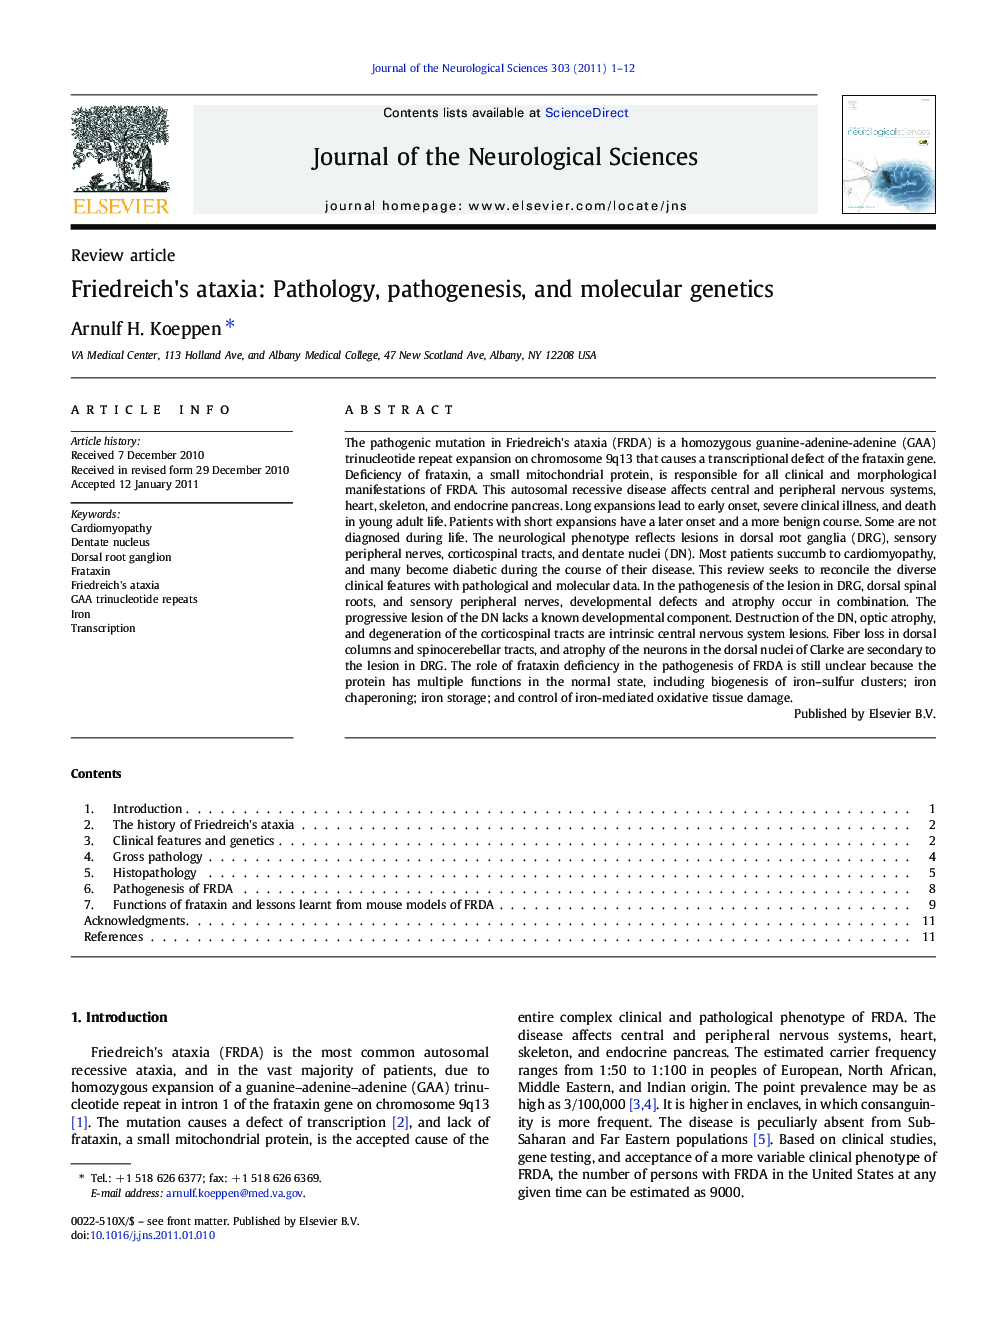 Friedreich's ataxia: Pathology, pathogenesis, and molecular genetics